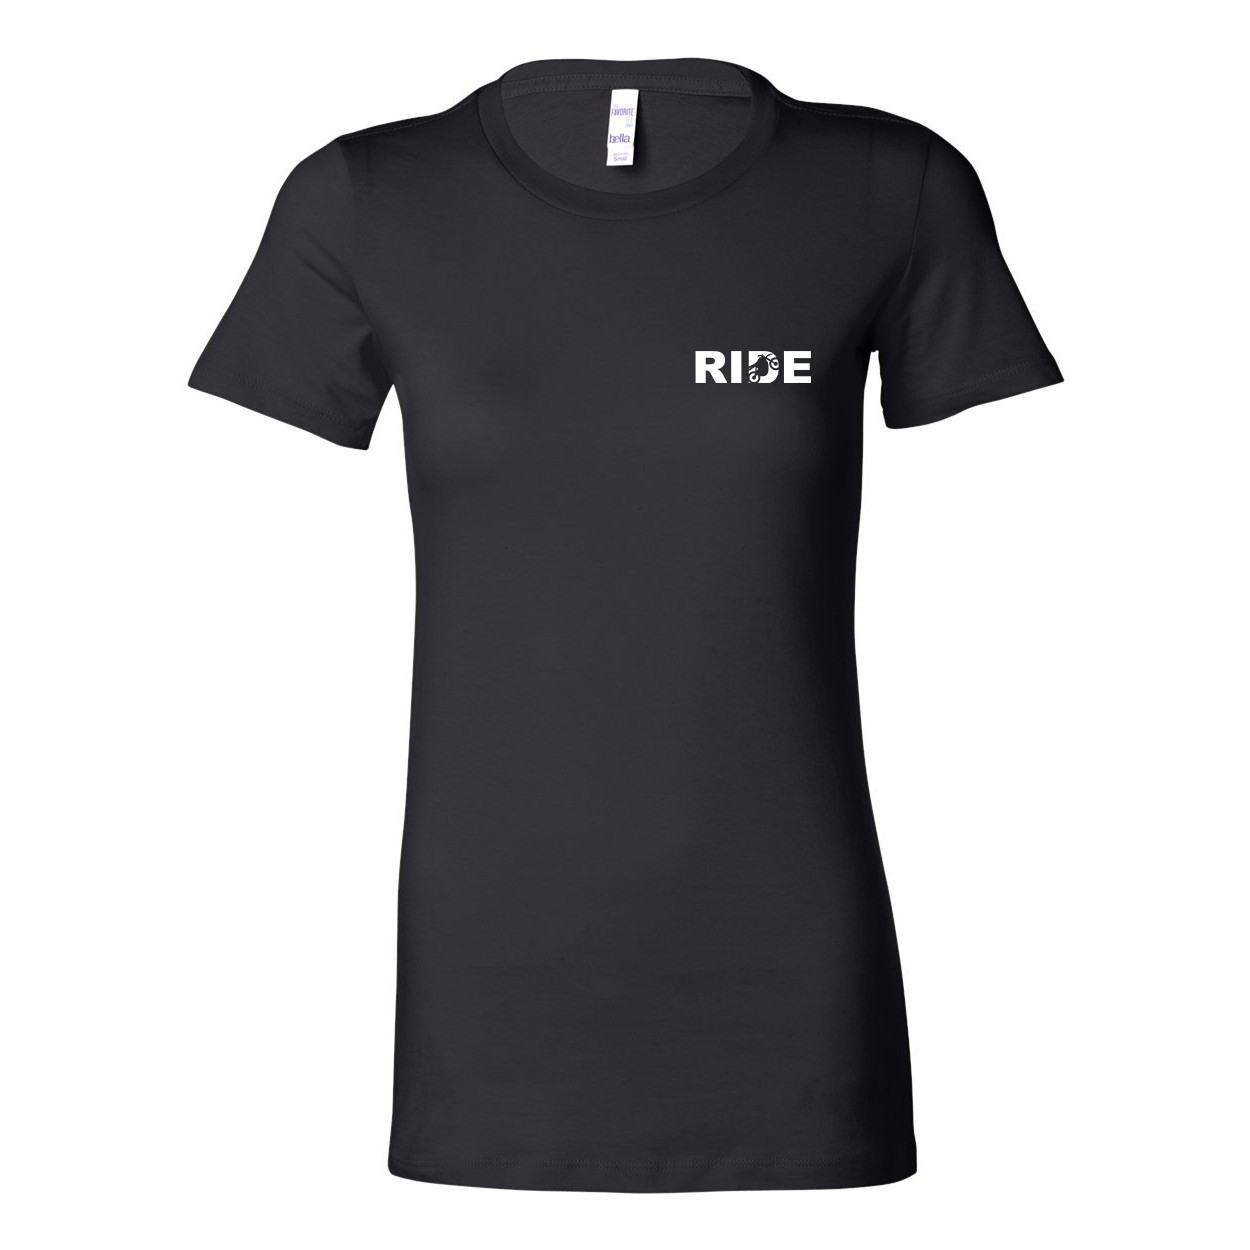 Ride Moto Logo Women's Night Out Fitted Tri-Blend T-Shirt Black (White Logo)